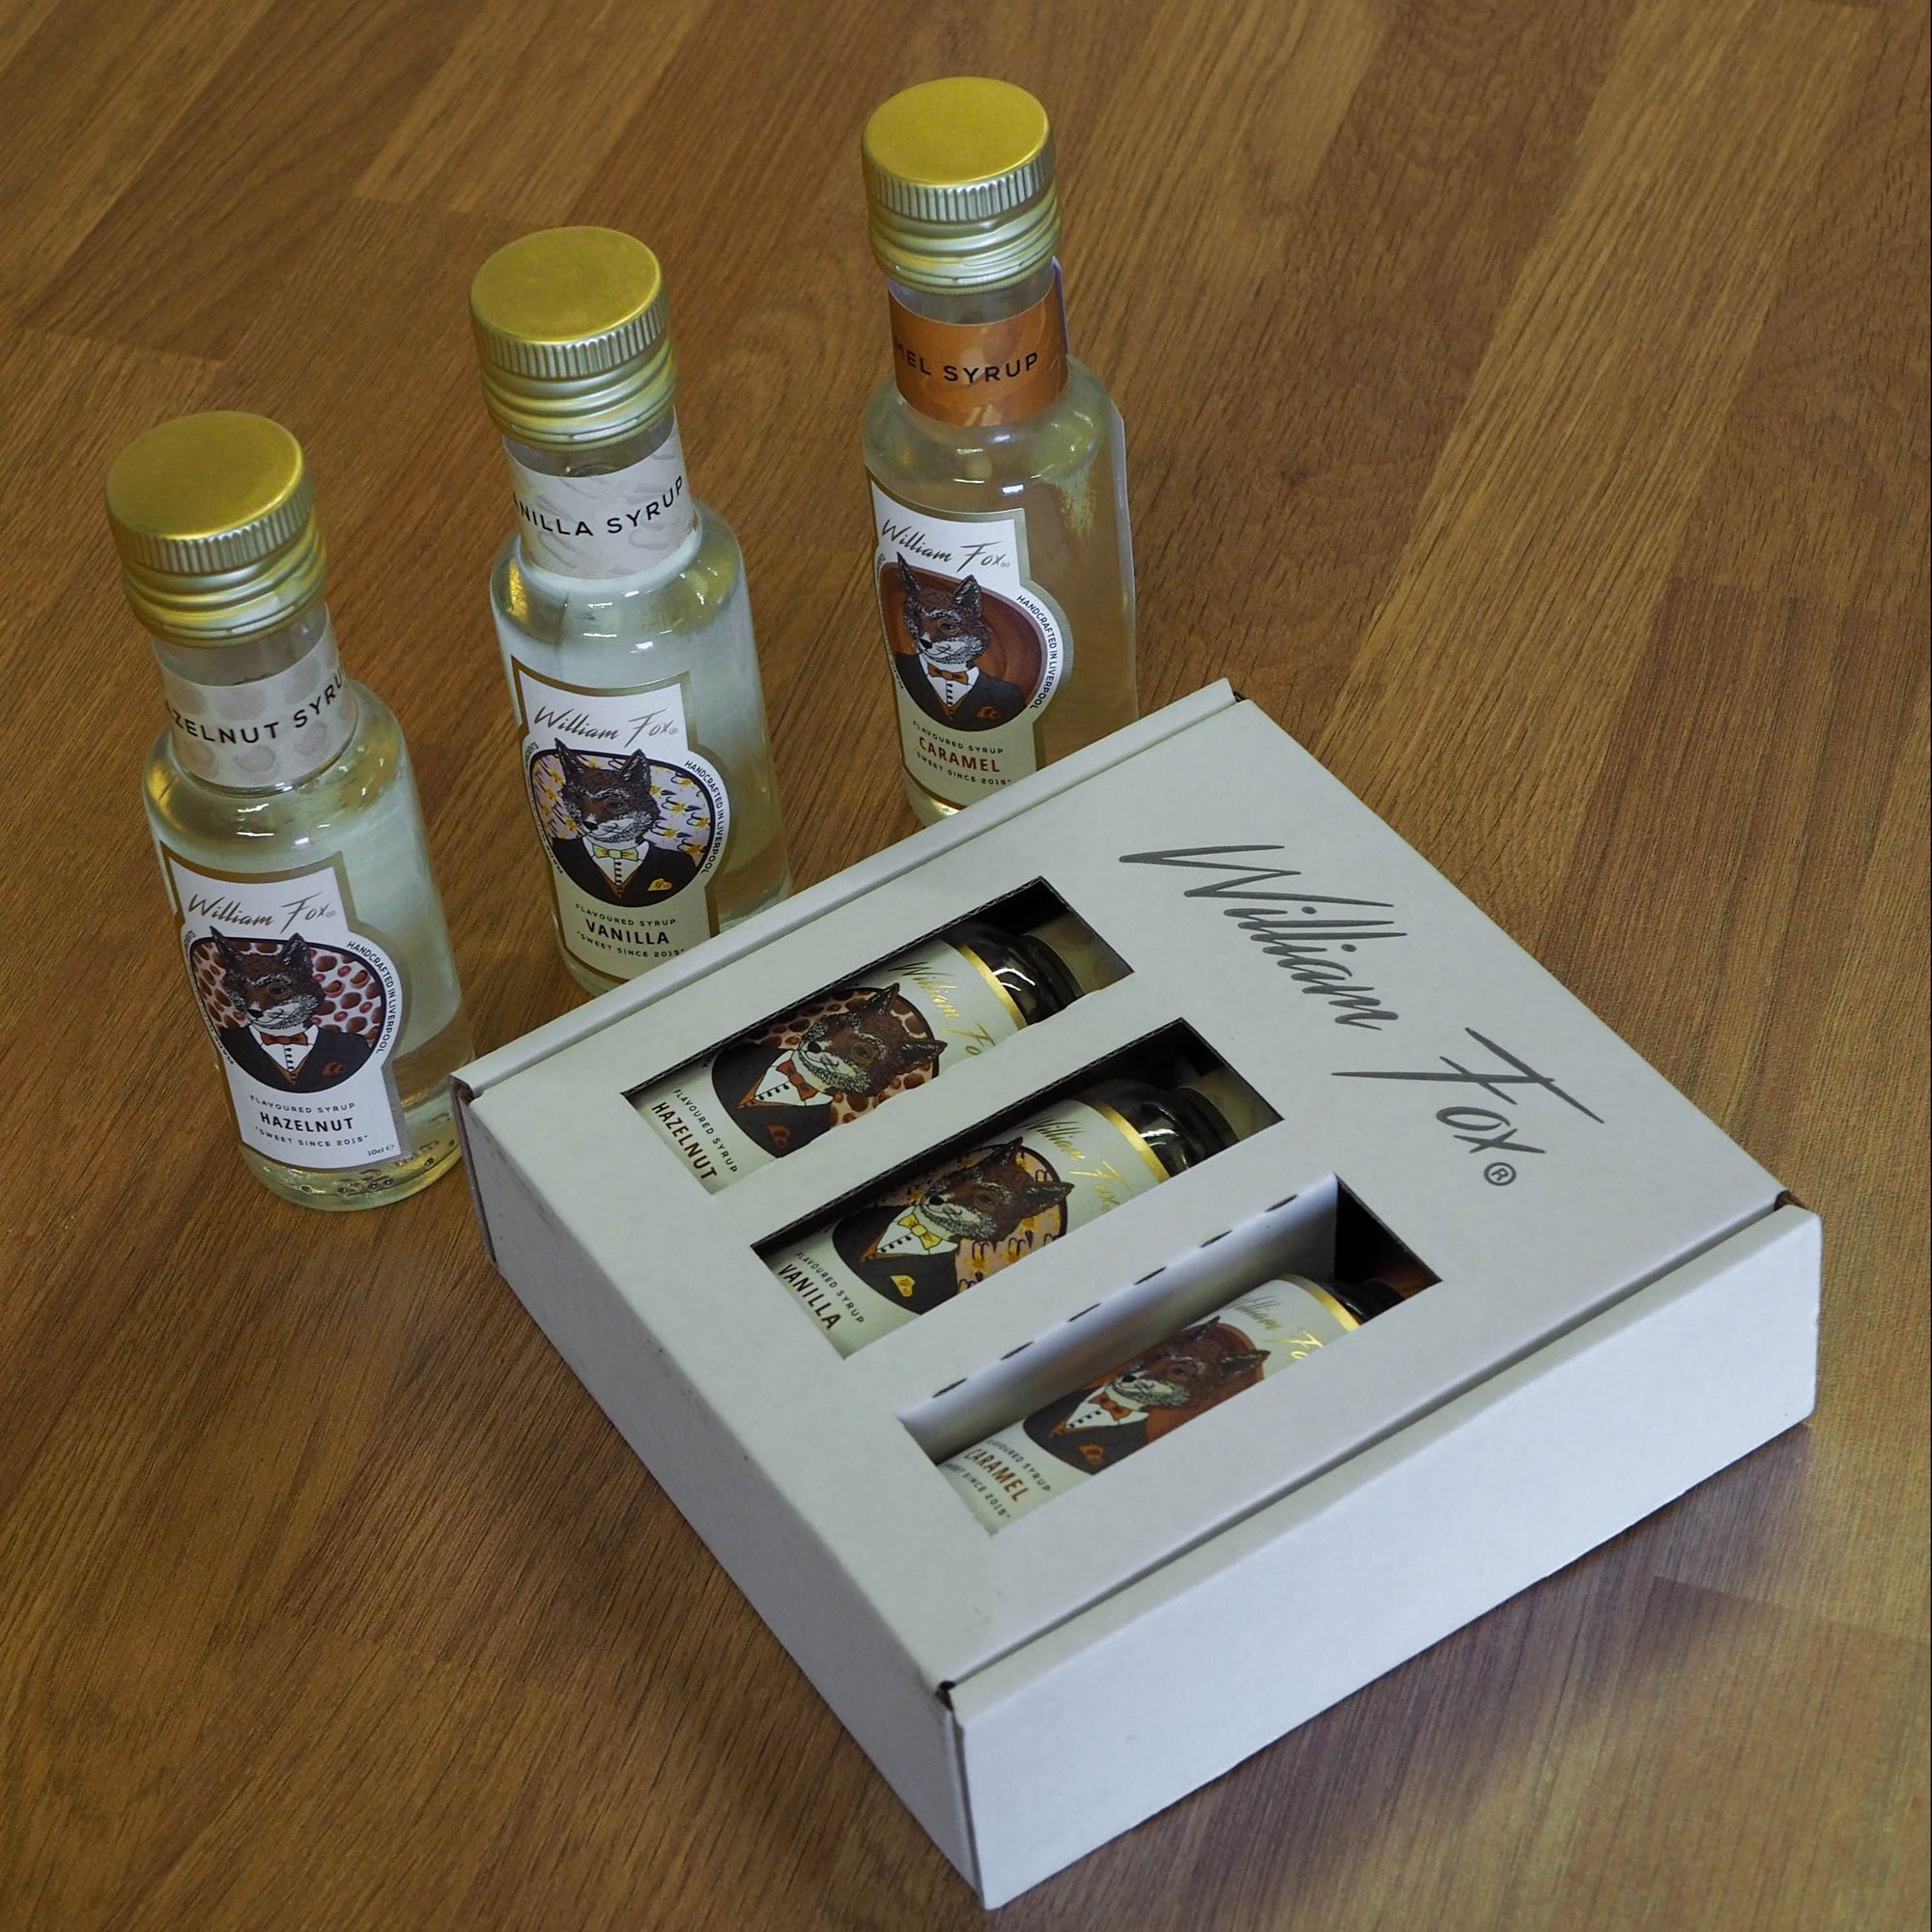 William Fox Mini Syrup Gift Set